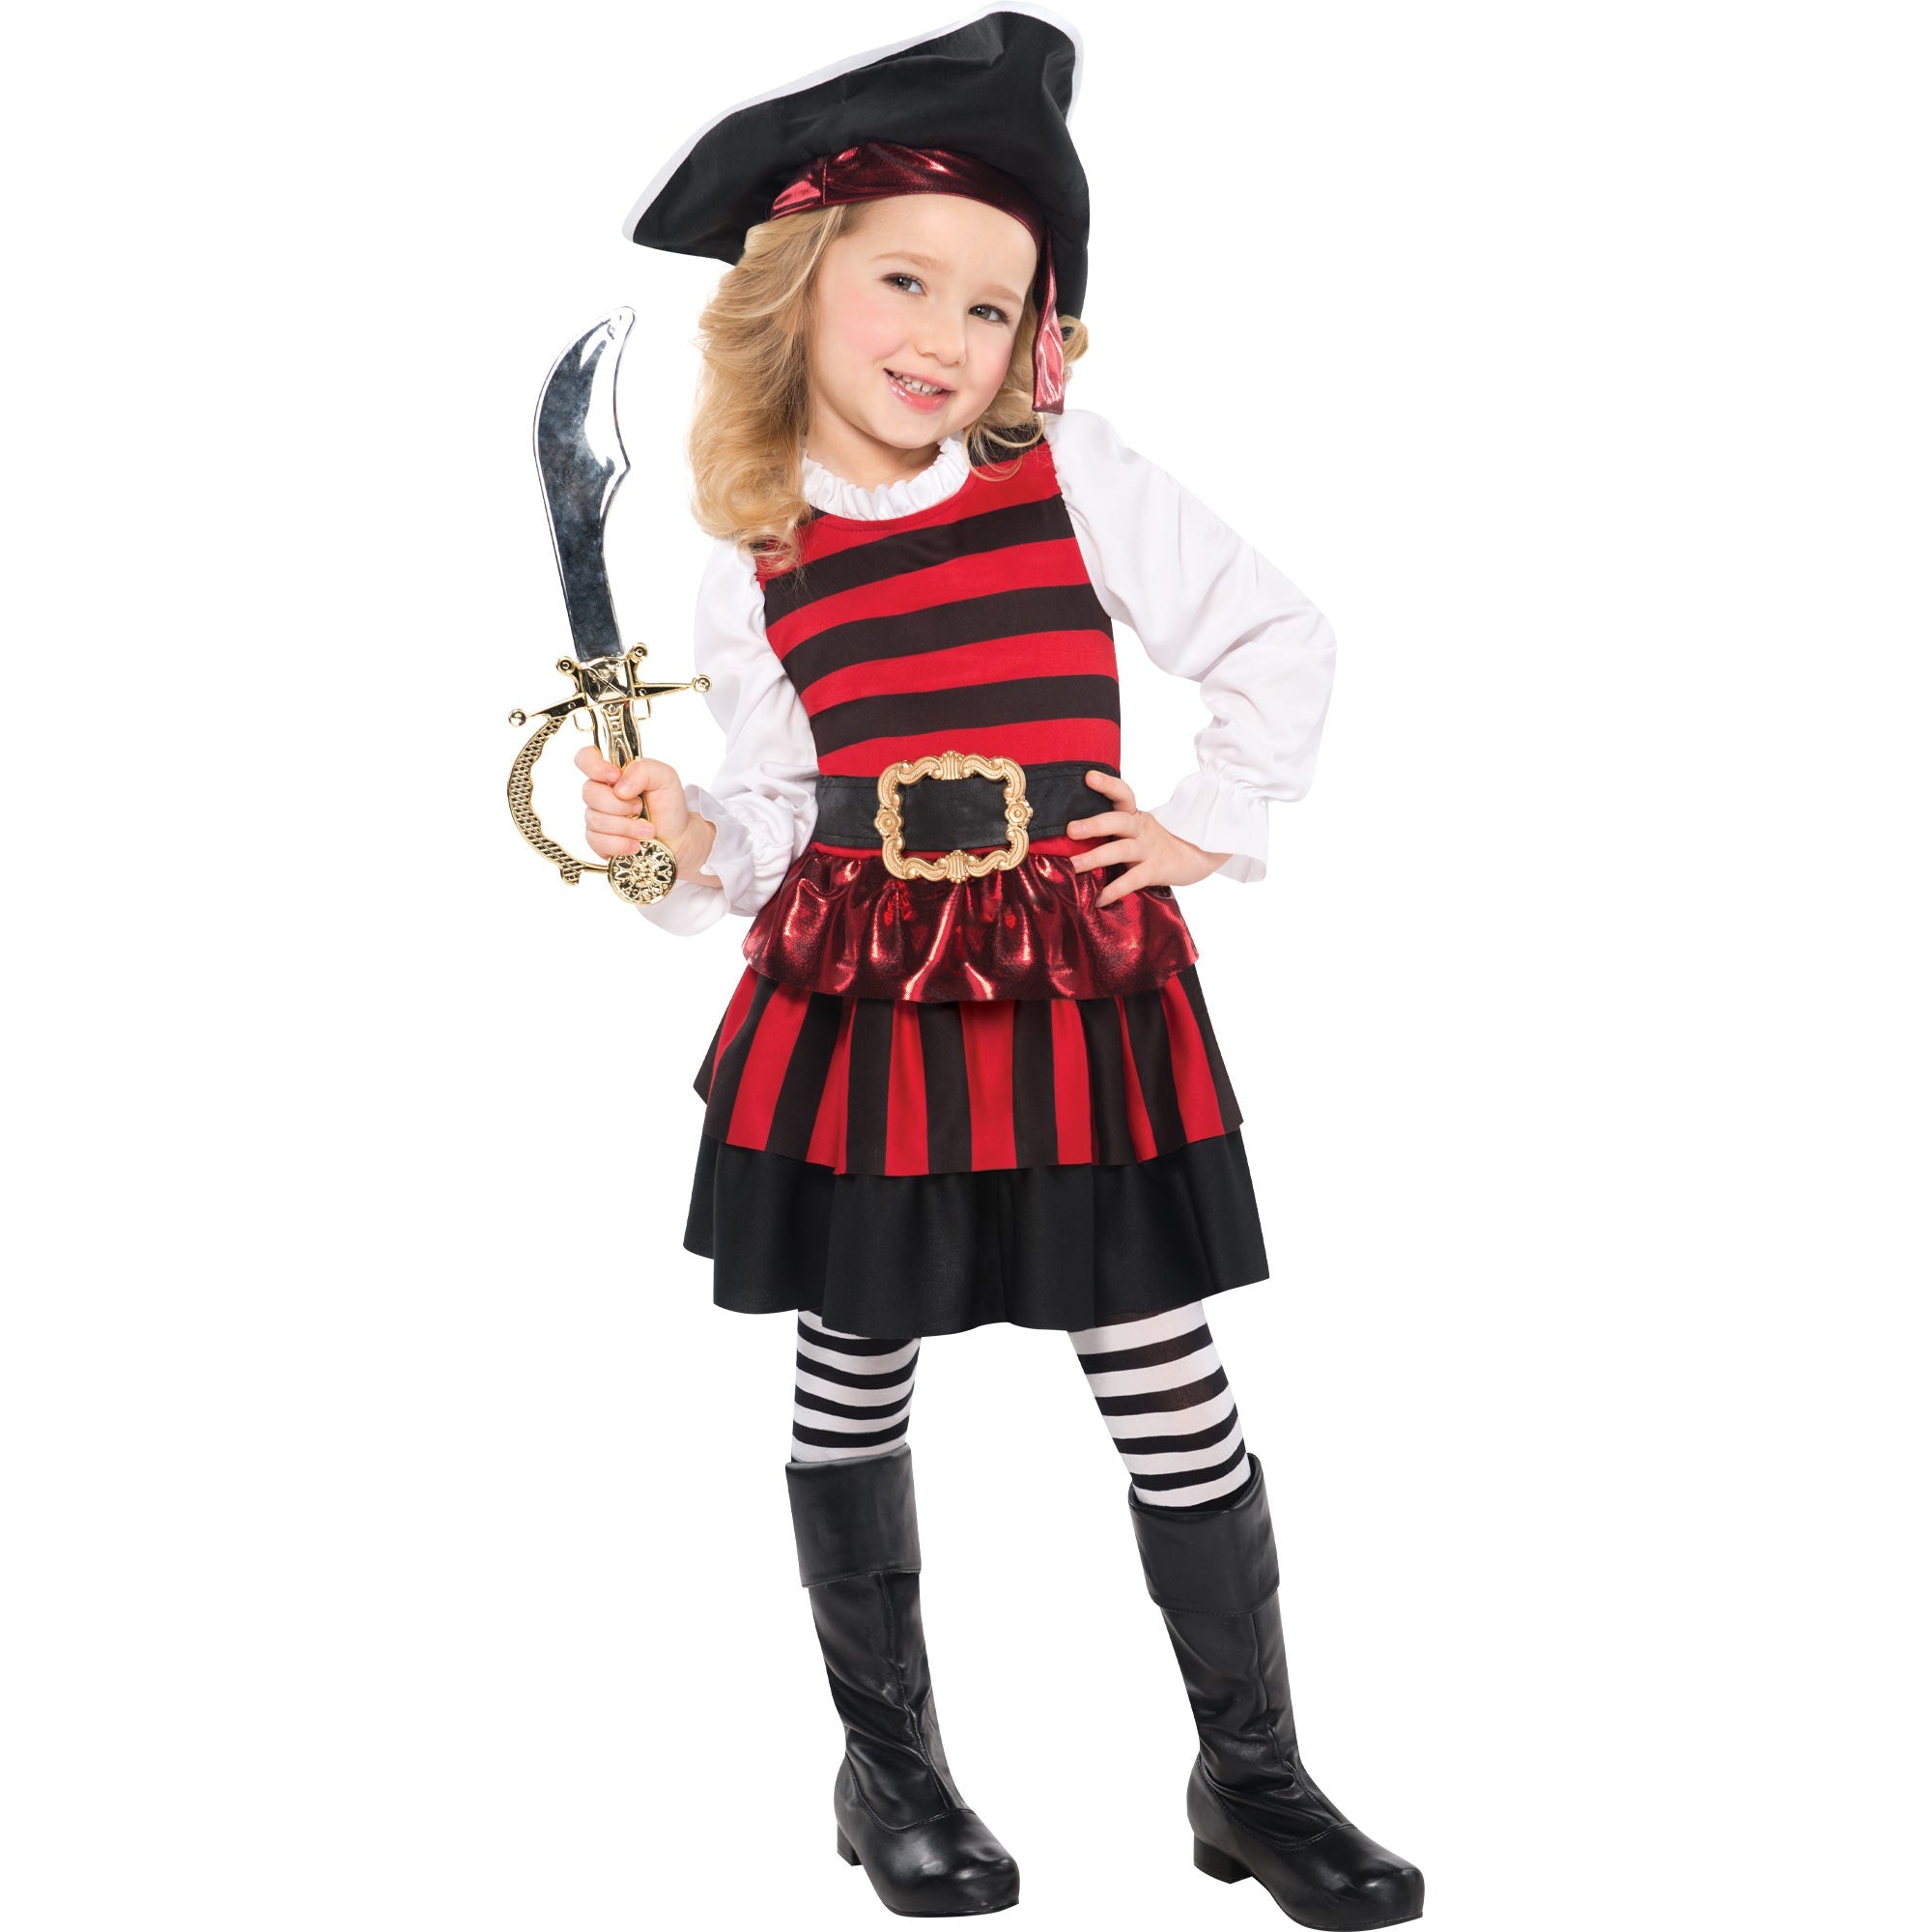 Costume Pirate Little Lass 3-4 Years